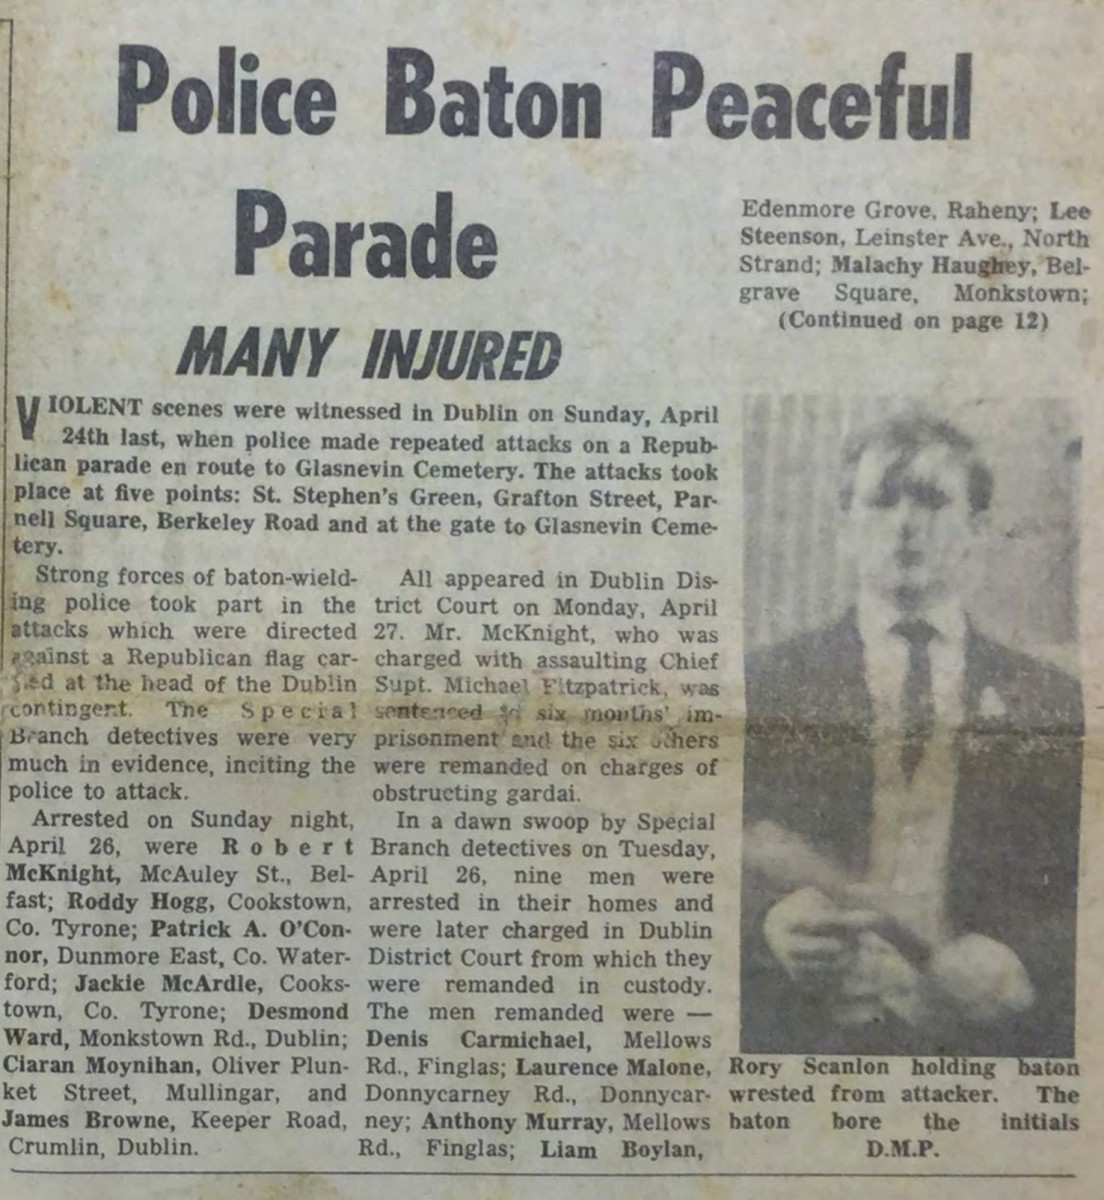 United Irishman: 1966 50th Anniversary - Dublin - Police Baton